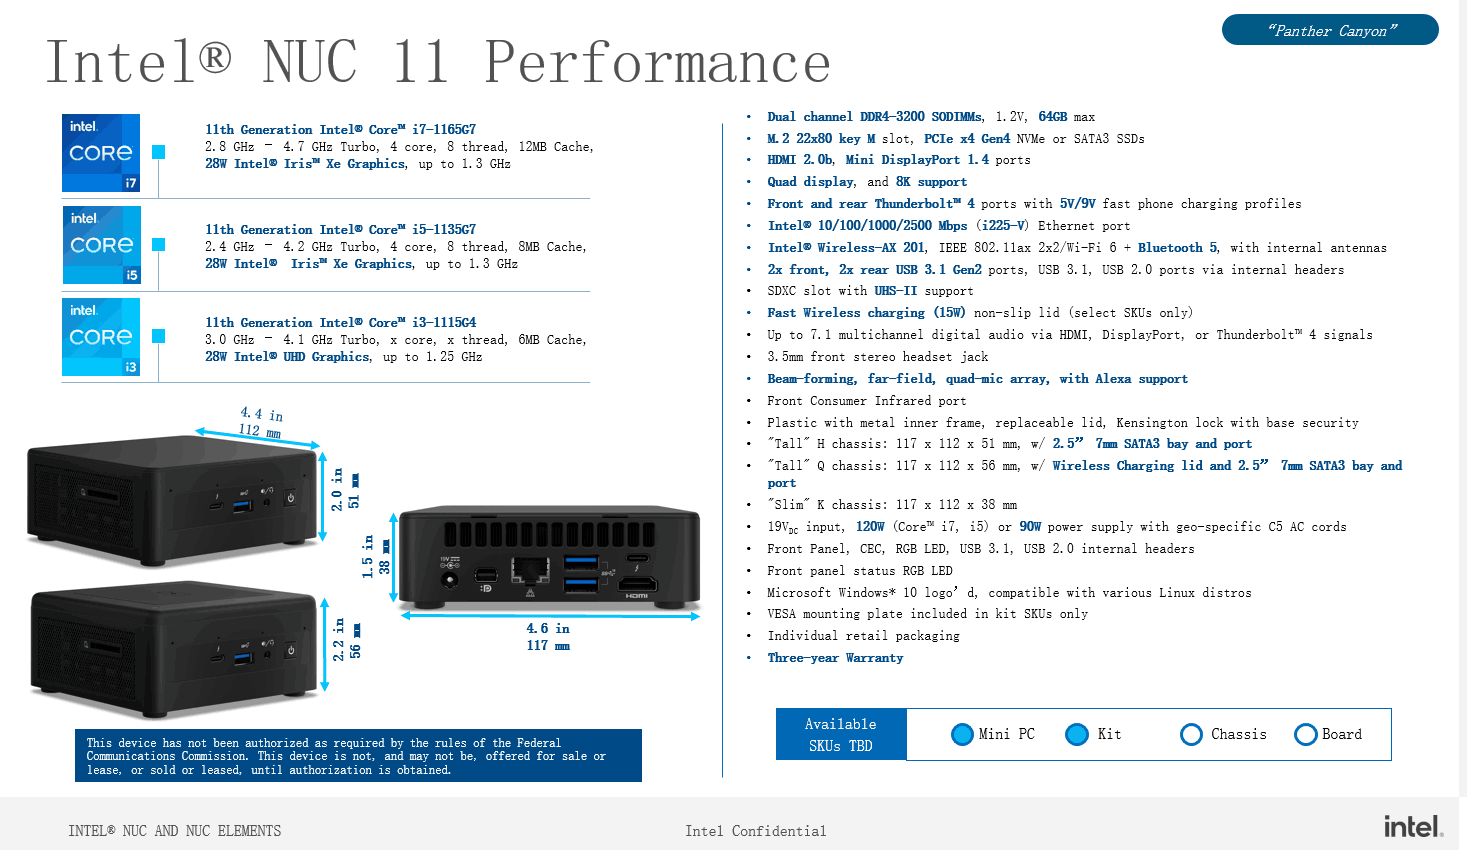 Intel NUC 11 Core i5-1135G7 11th Gen Processor Performance kit